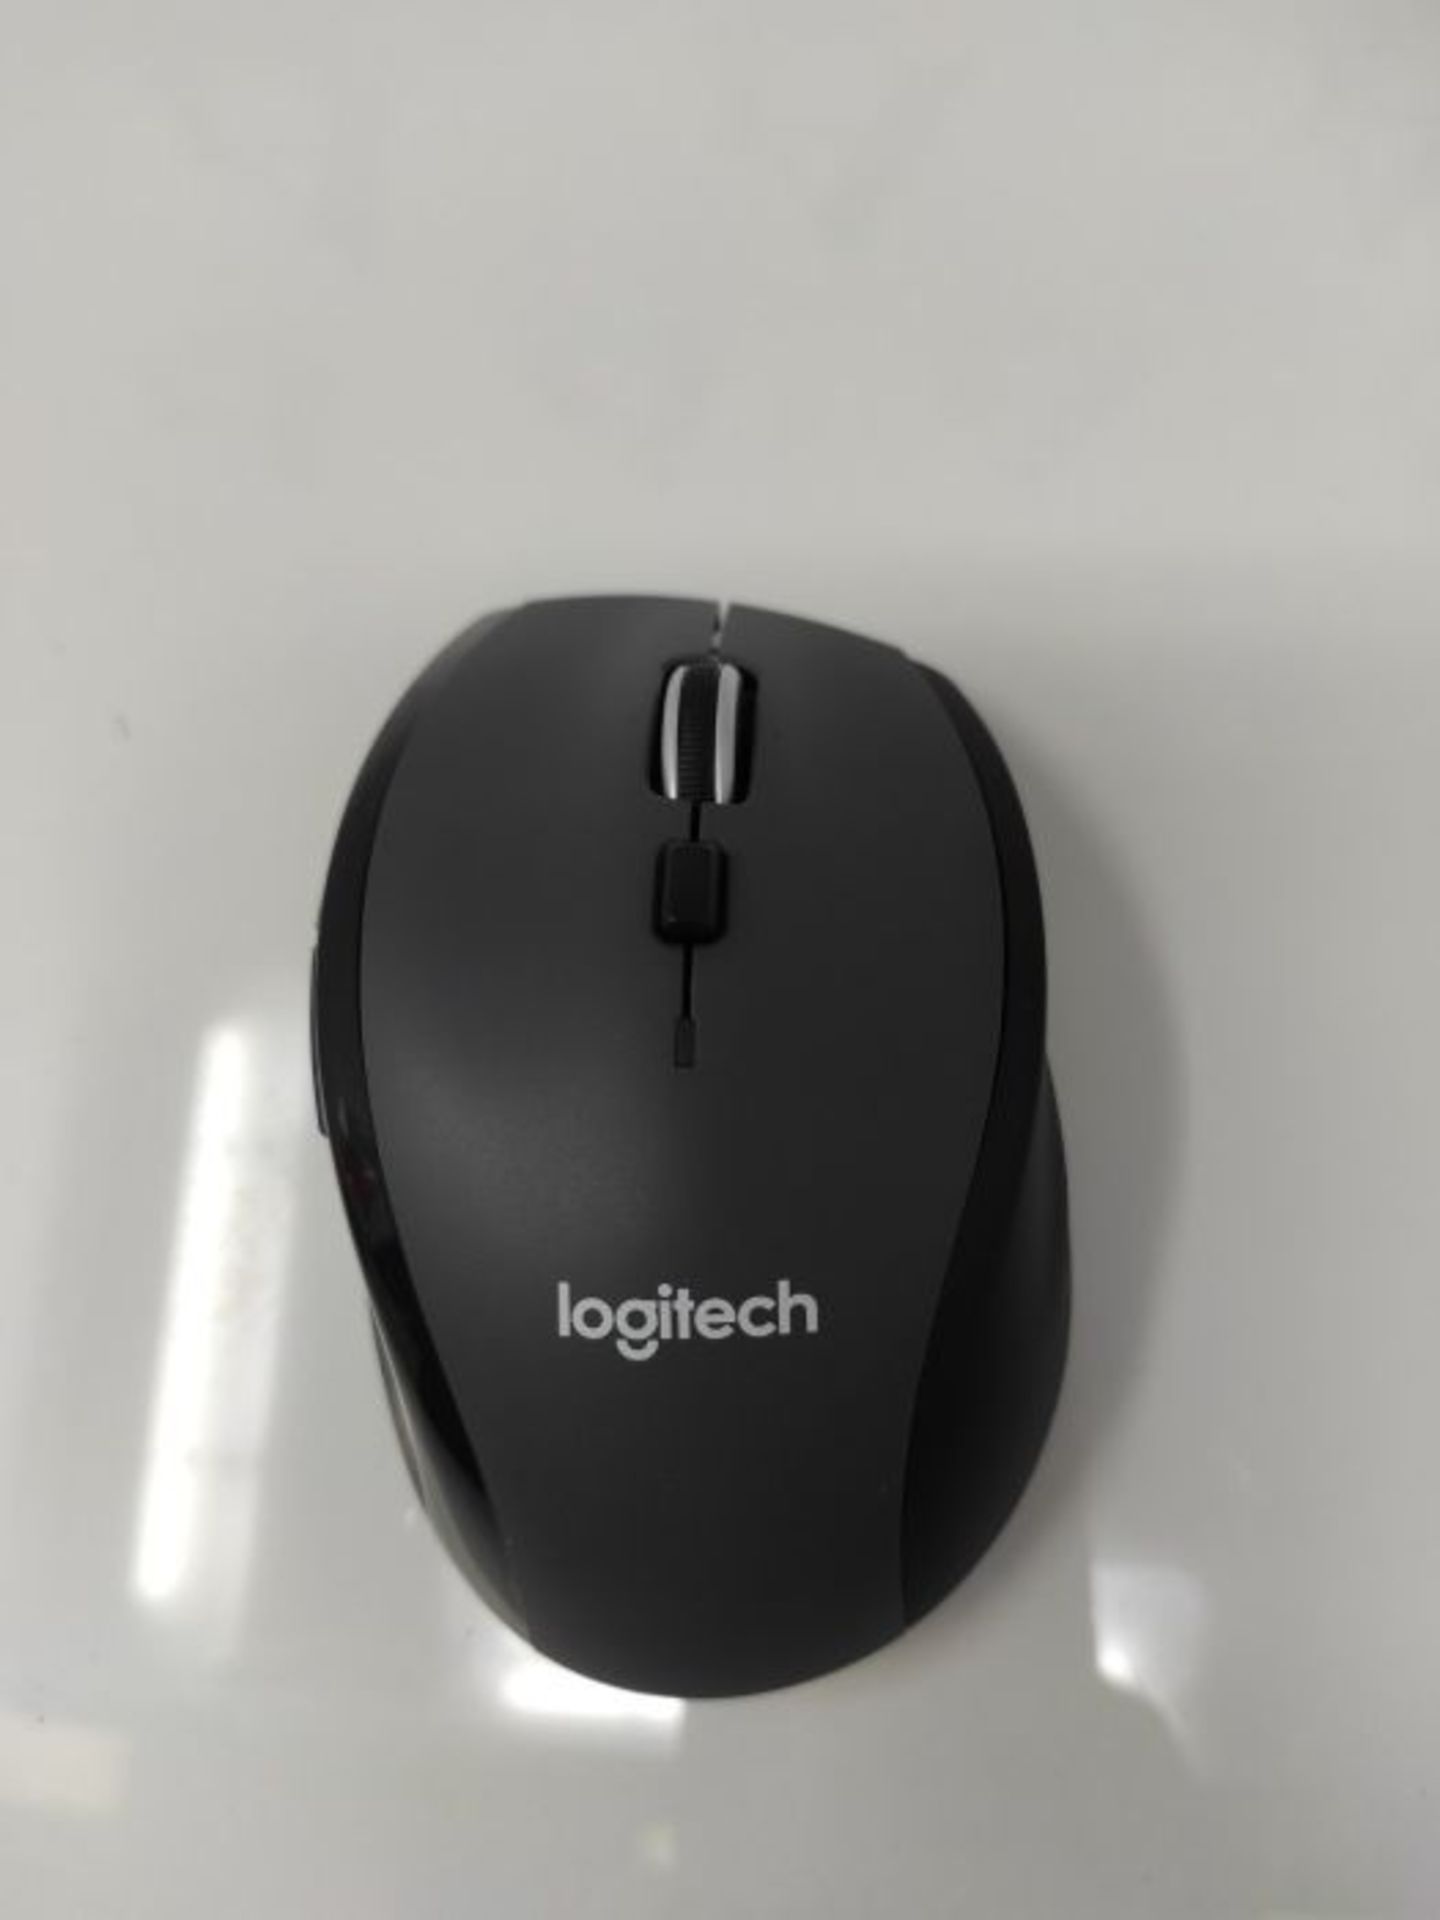 Logitech M705 Marathon Wireless Mouse, 2.4 GHz USB Unifying Receiver, 1000 DPI, 5-Prog - Image 3 of 3